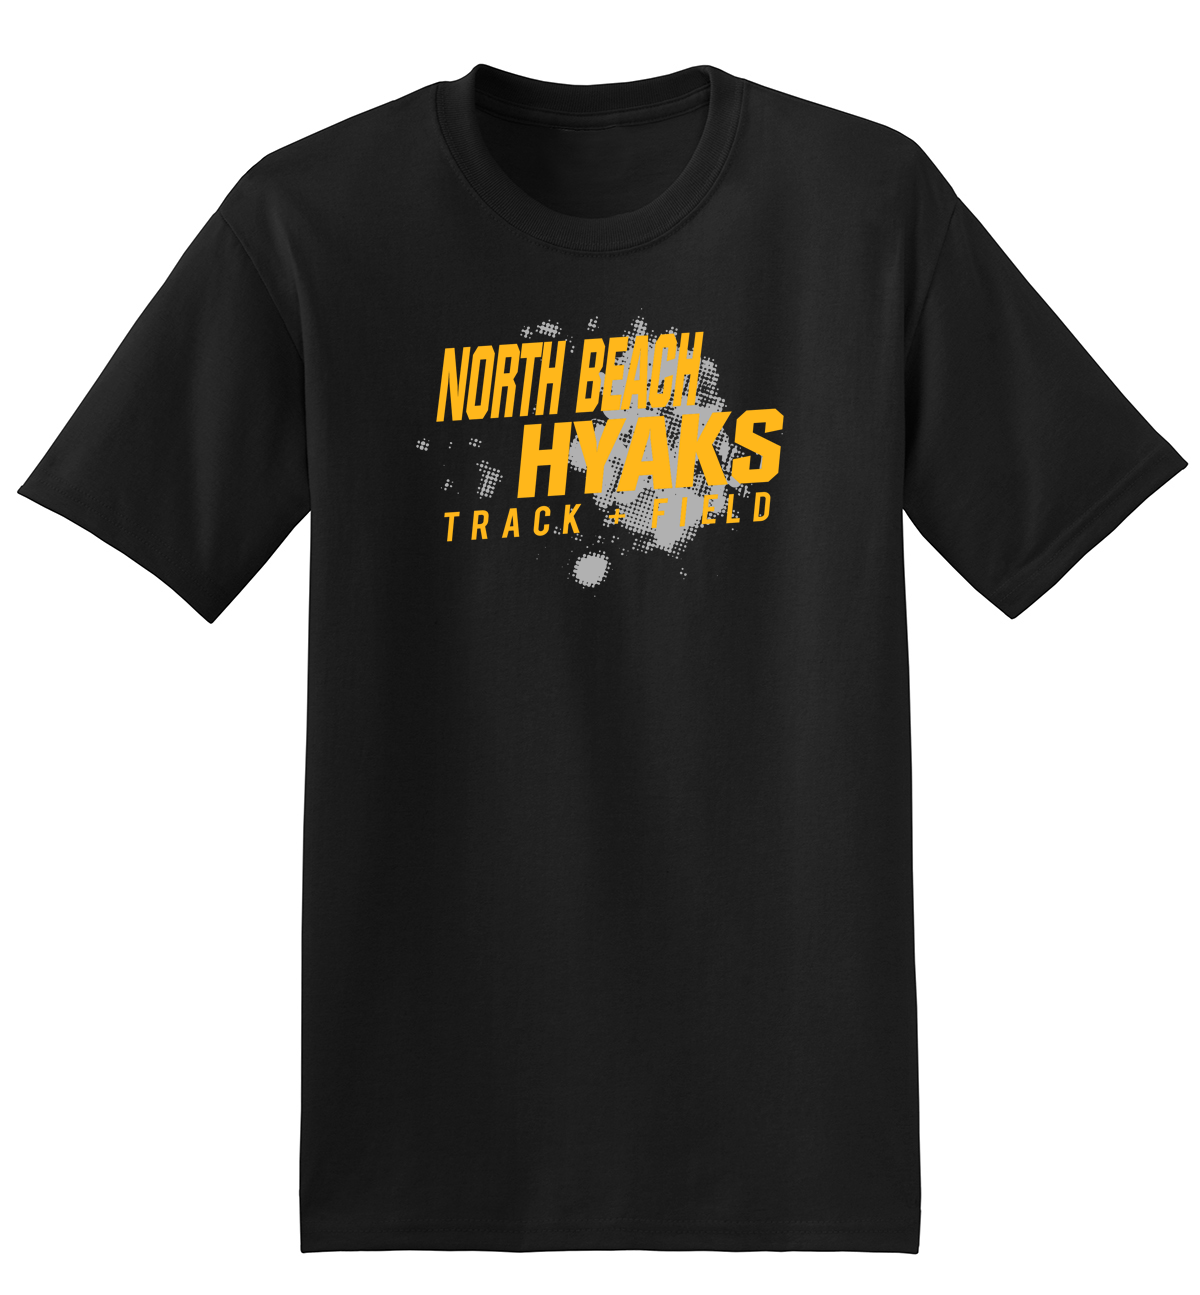 North Beach Track & Field T-Shirt